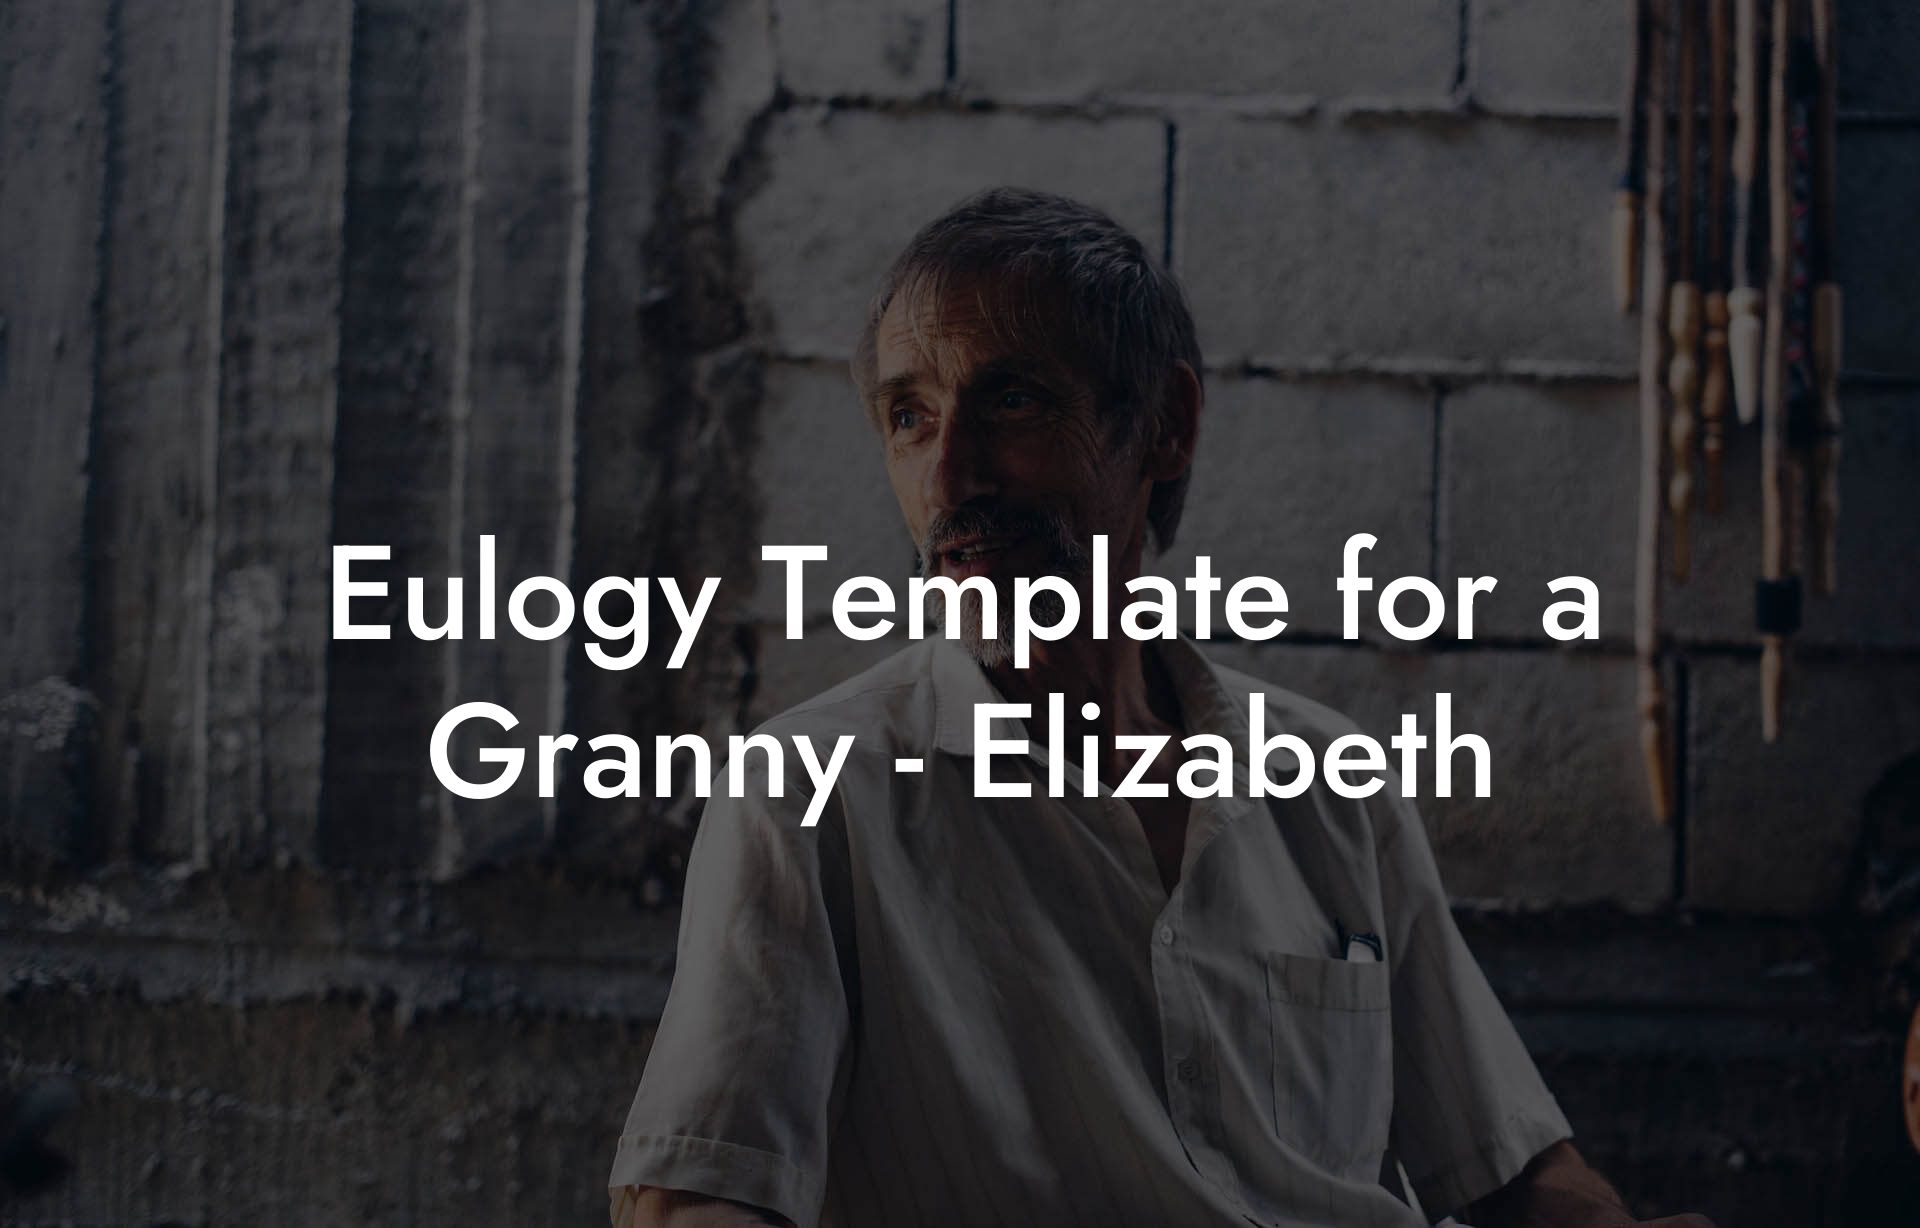 Eulogy Template for a Granny - Elizabeth